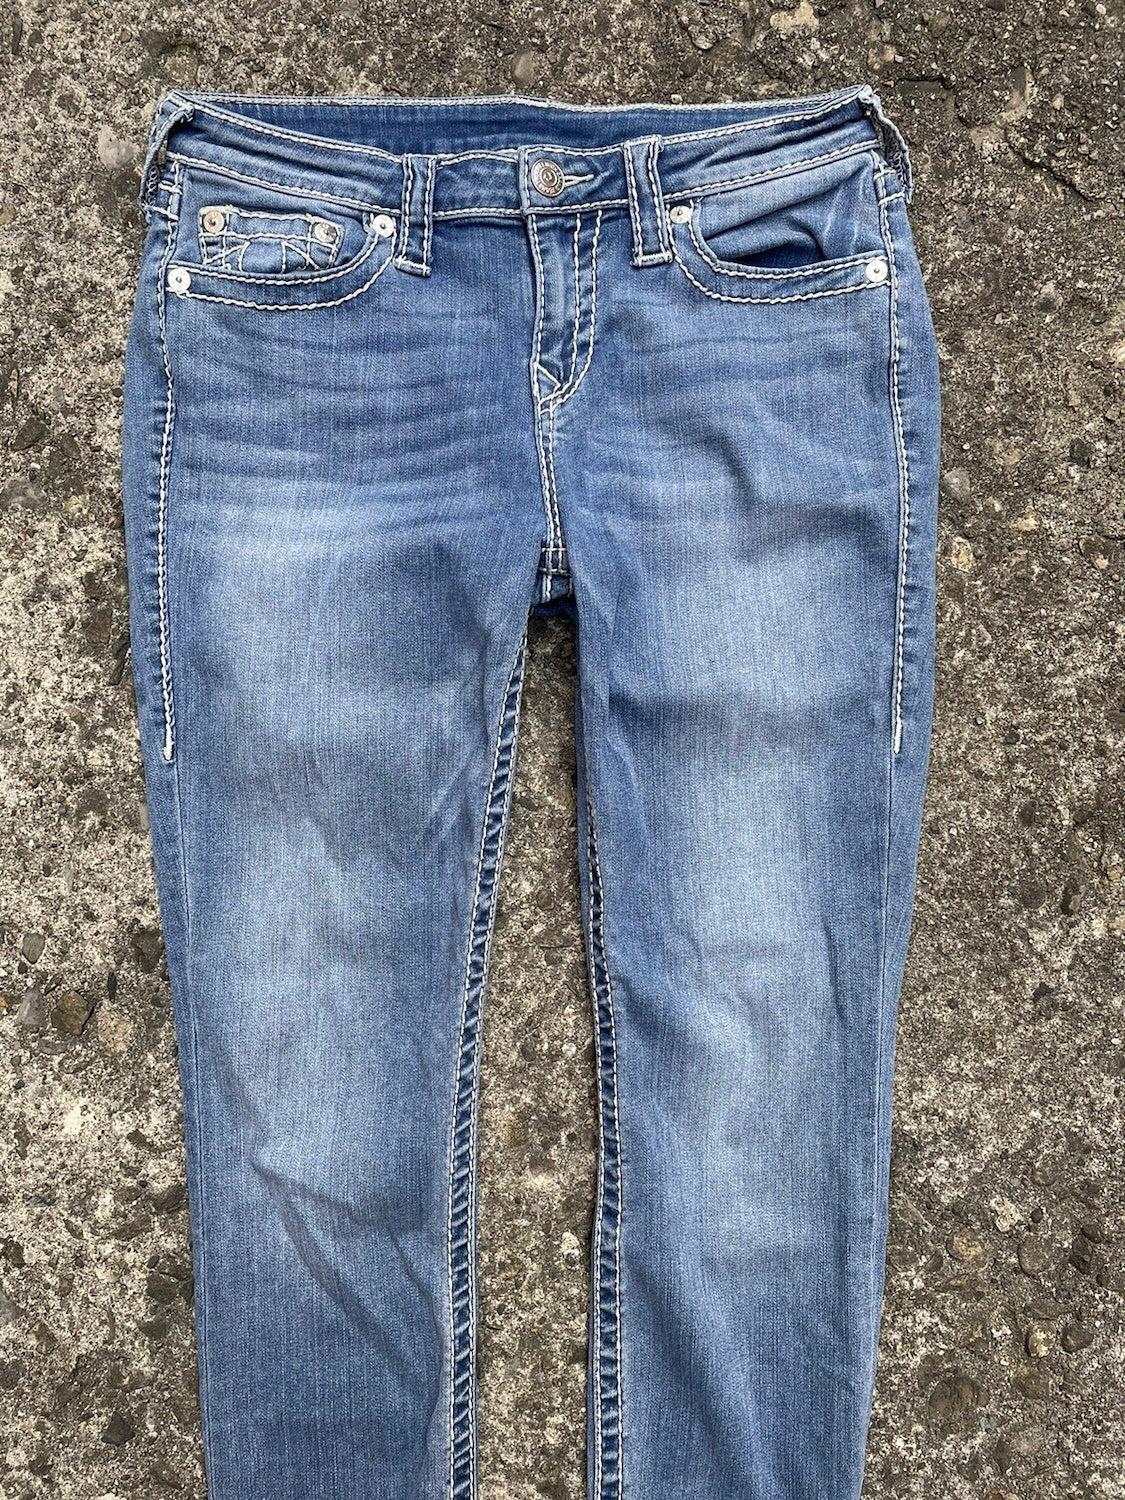 True Religion Skinny Super T Denim Jeans - 29